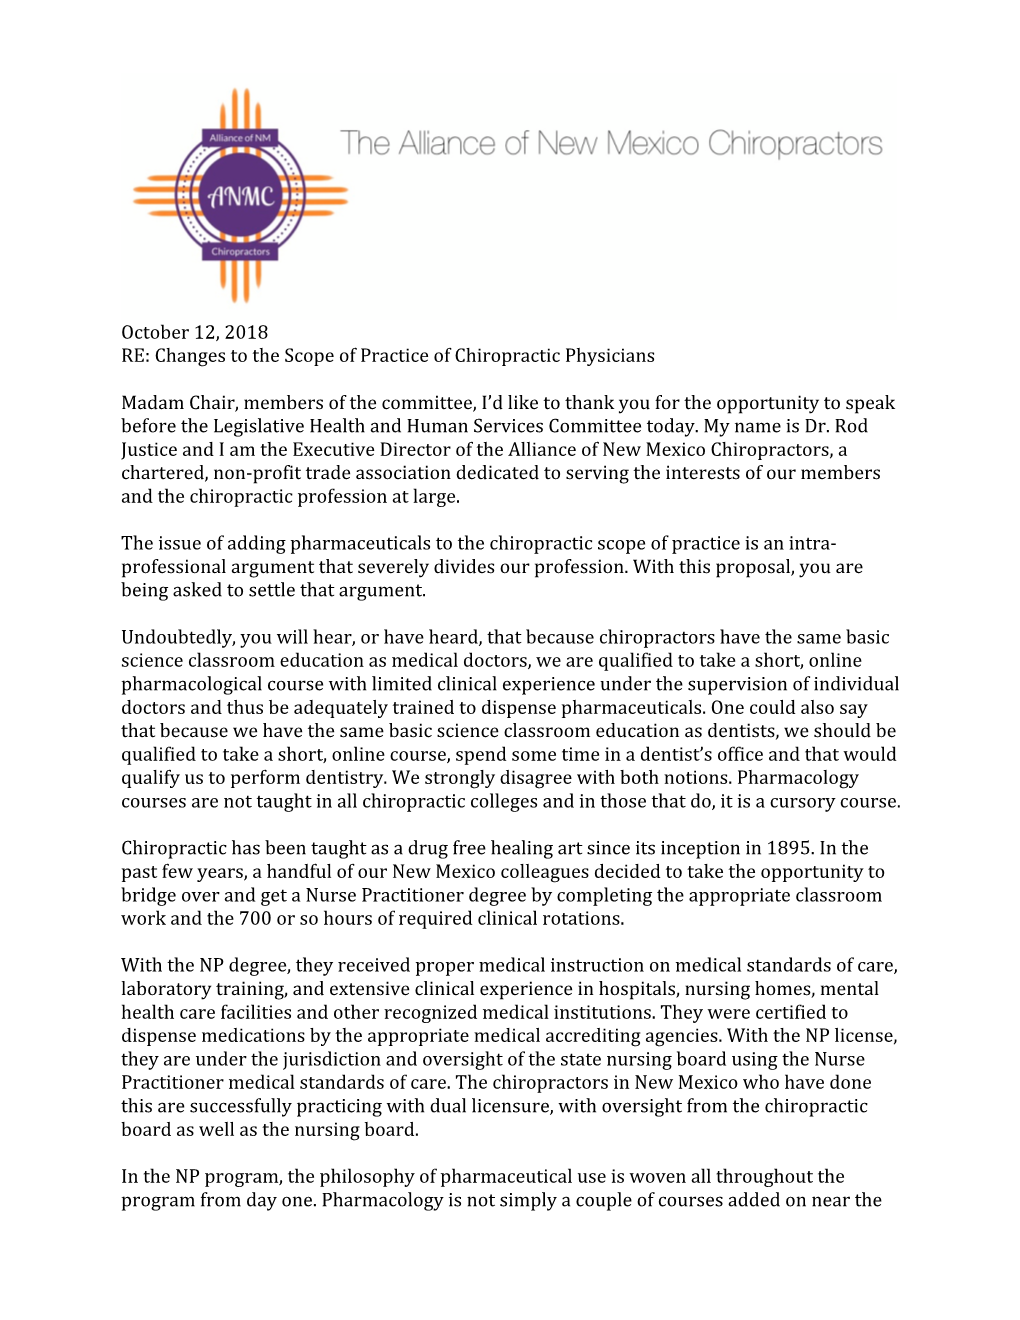 Alliance of New Mexico Chiropractors Testimony